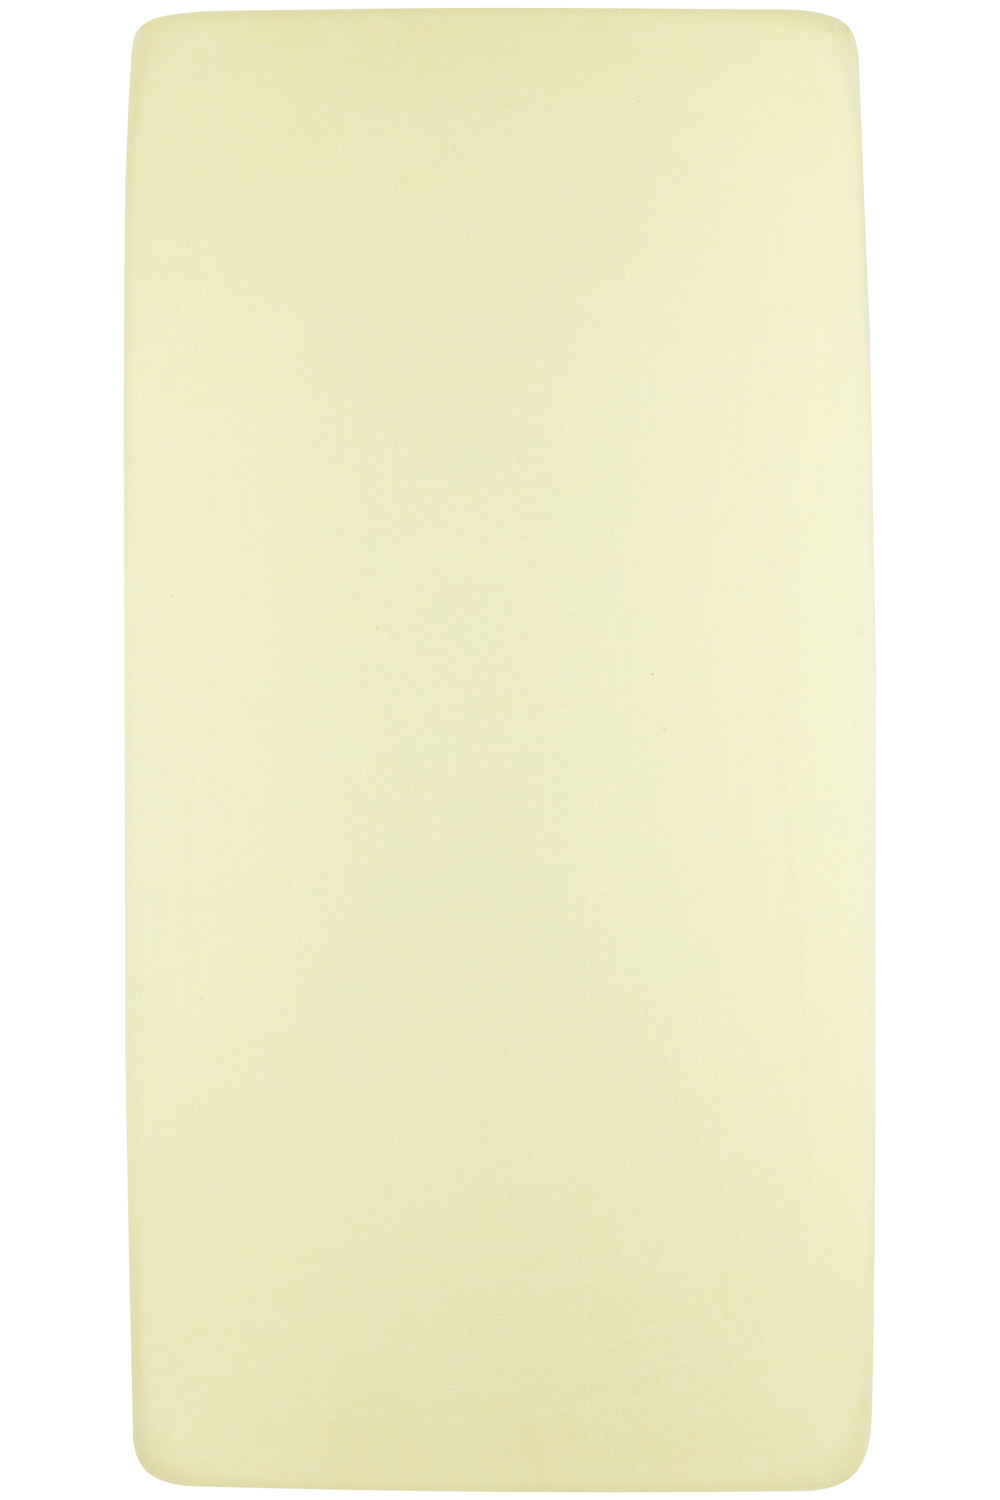 Jersey Hoeslaken Ledikant - Soft Yellow - 60x120cm